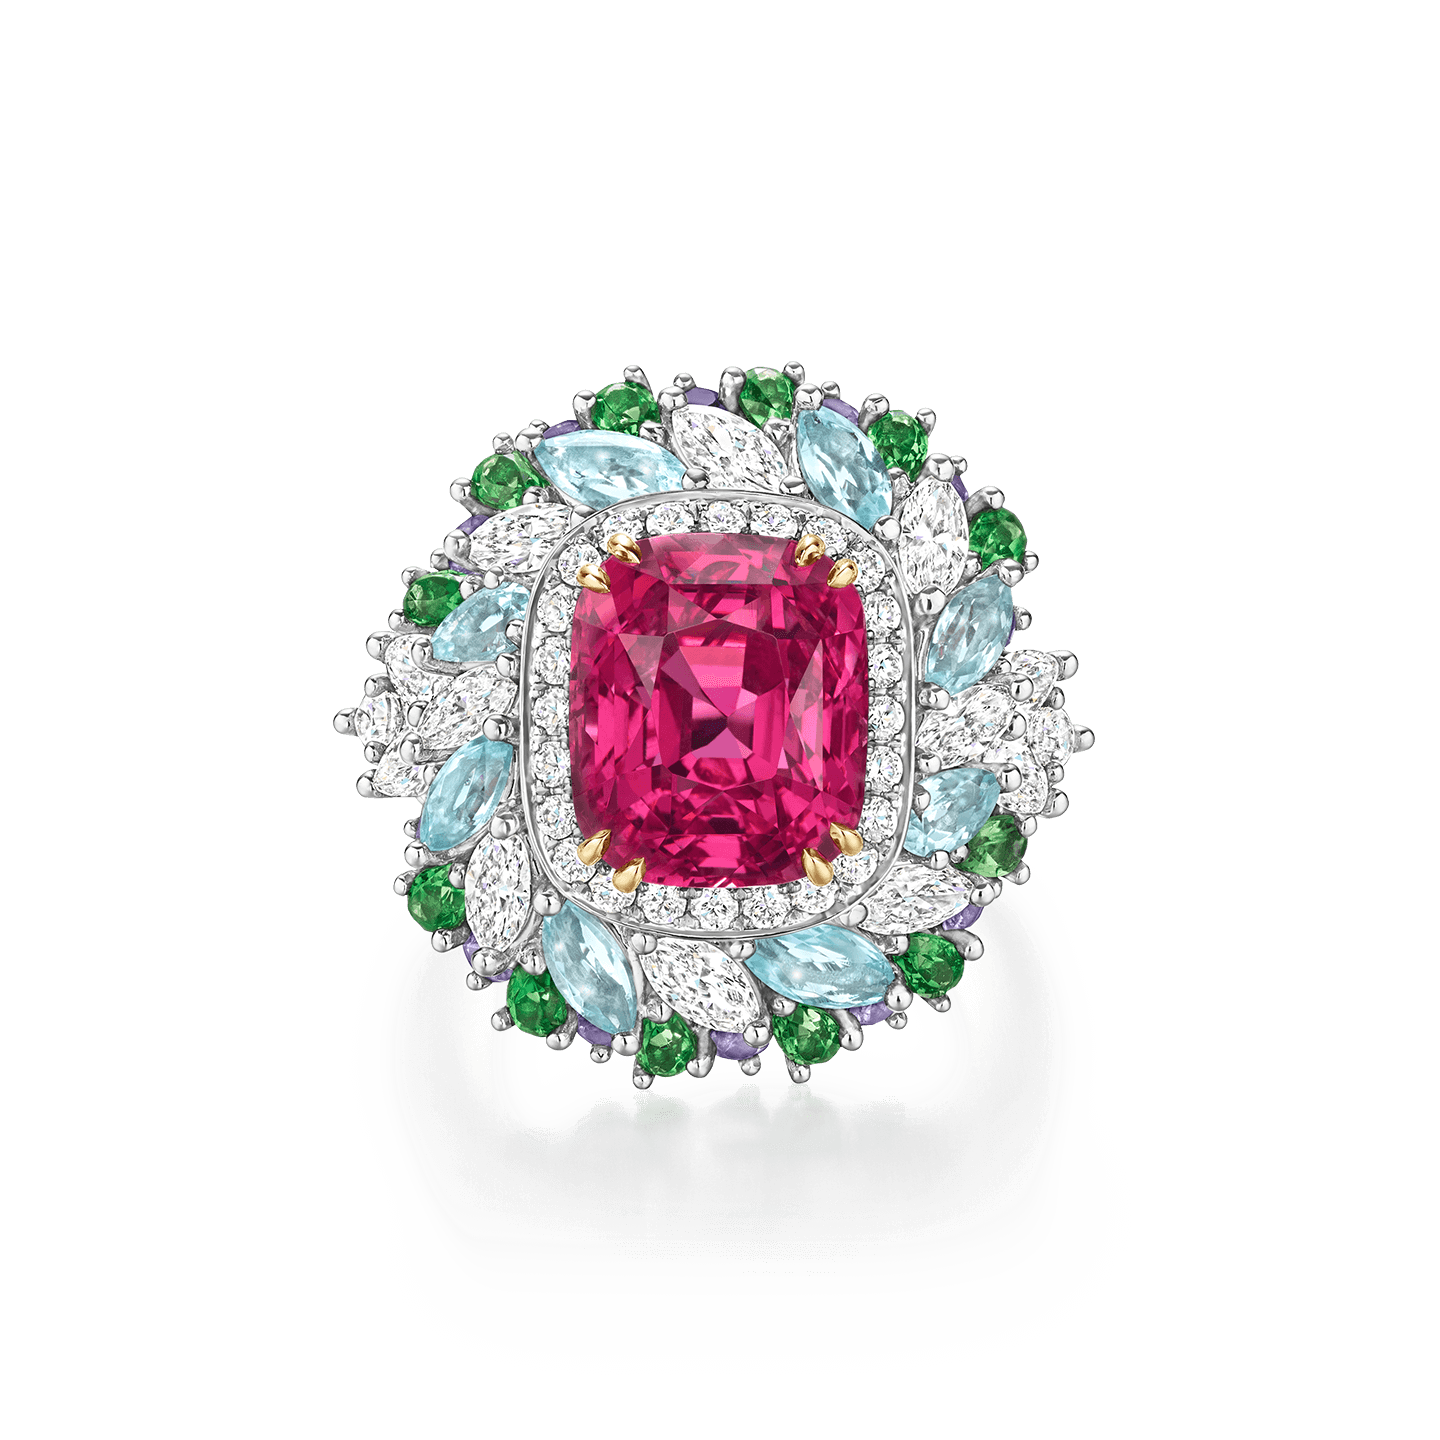 Winston Candy Reddish Pink Spinel Ring with Tsavorite Garnets, Purple Sapphires, Paraiba Tourmaline and Diamonds